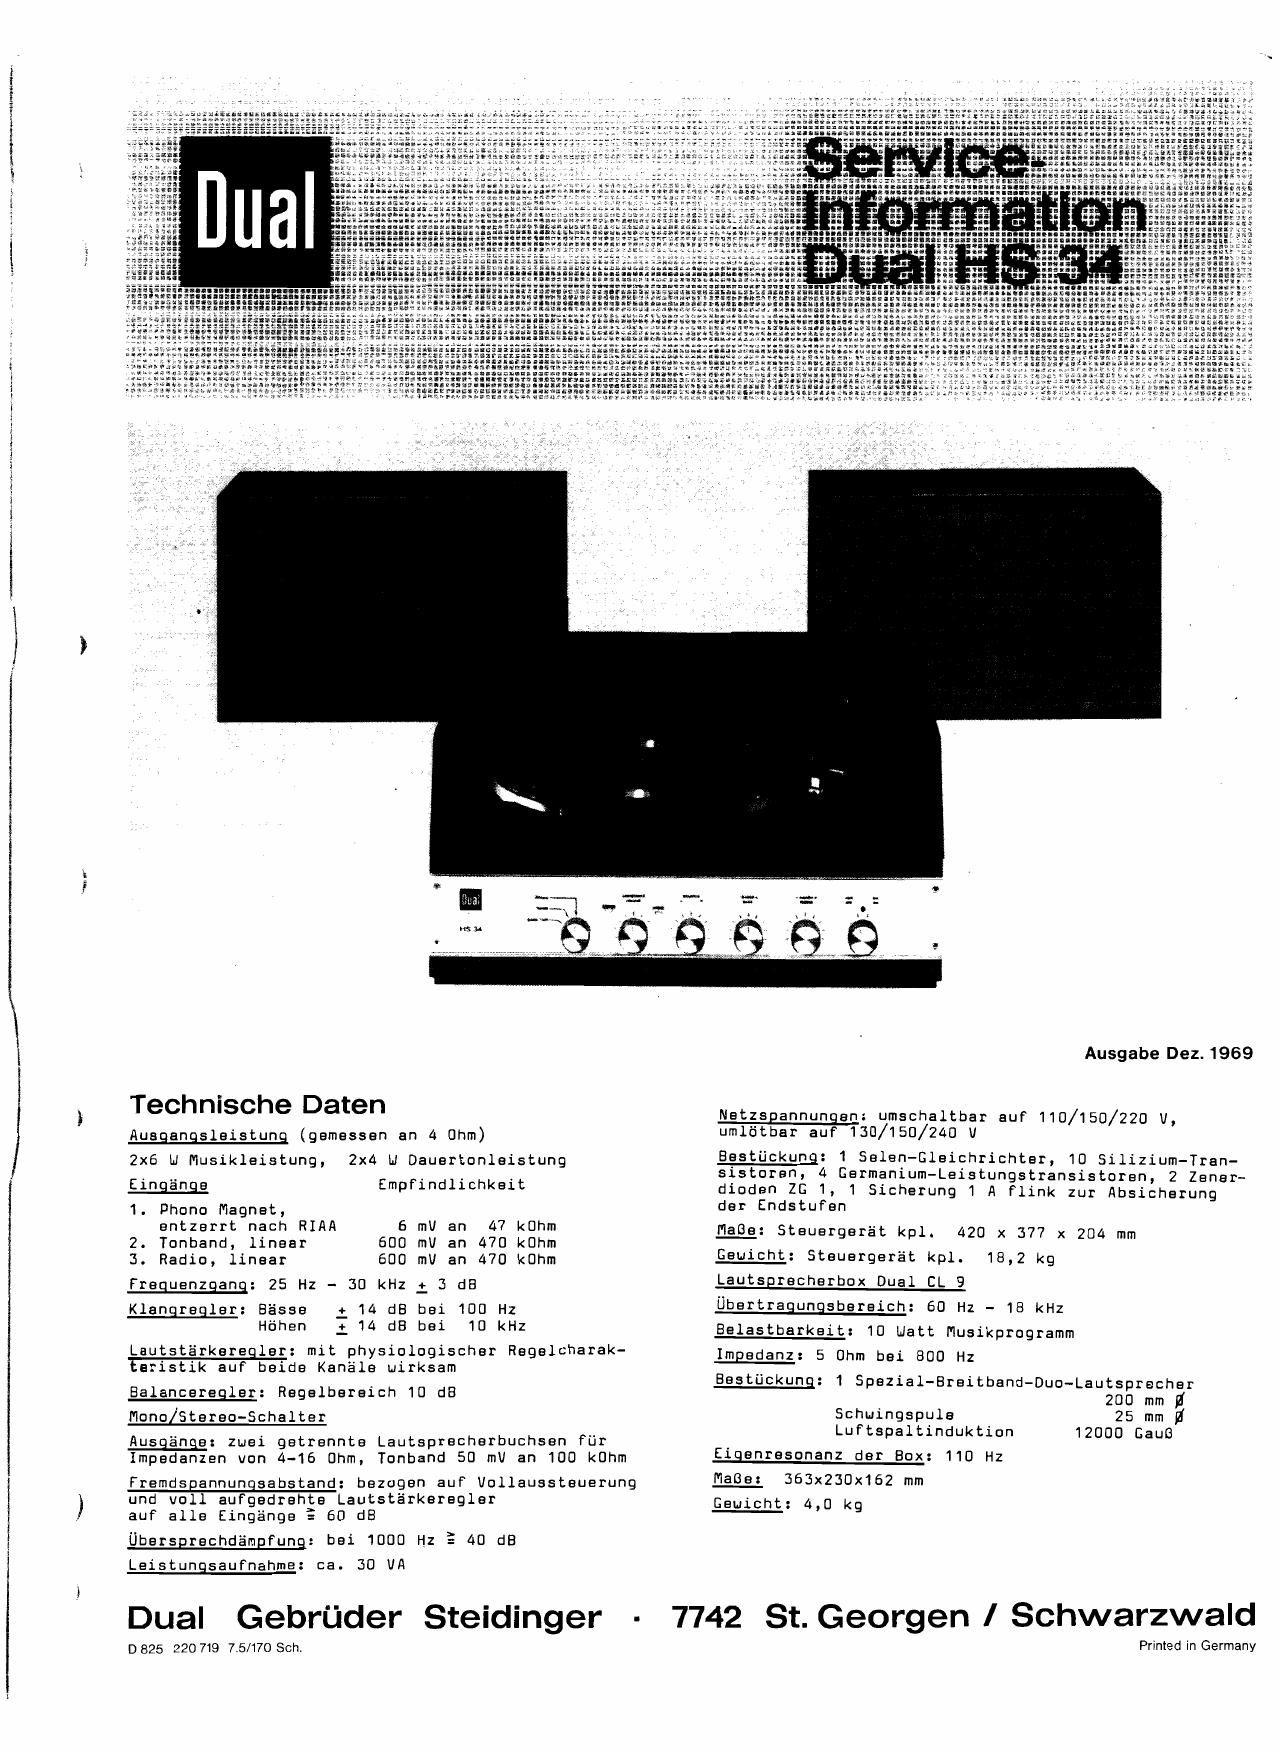 Dual HS 34 Service Manual